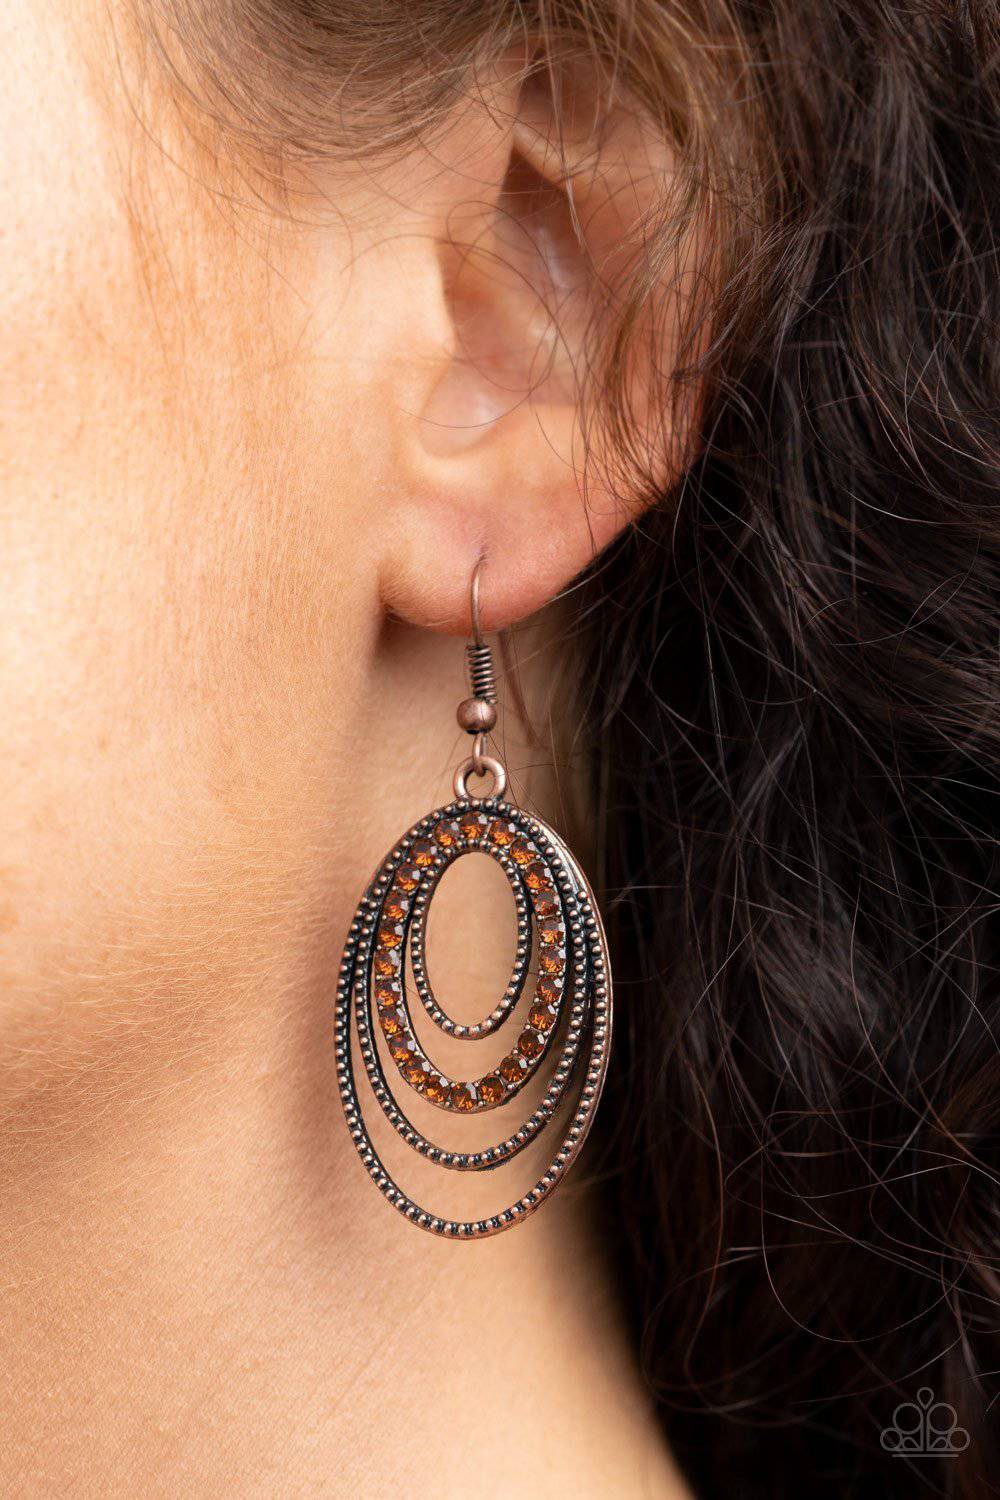 D334 - Date Night Diva Copper Earrings by Paparazzi Accessories on Fancy5Fashion.com